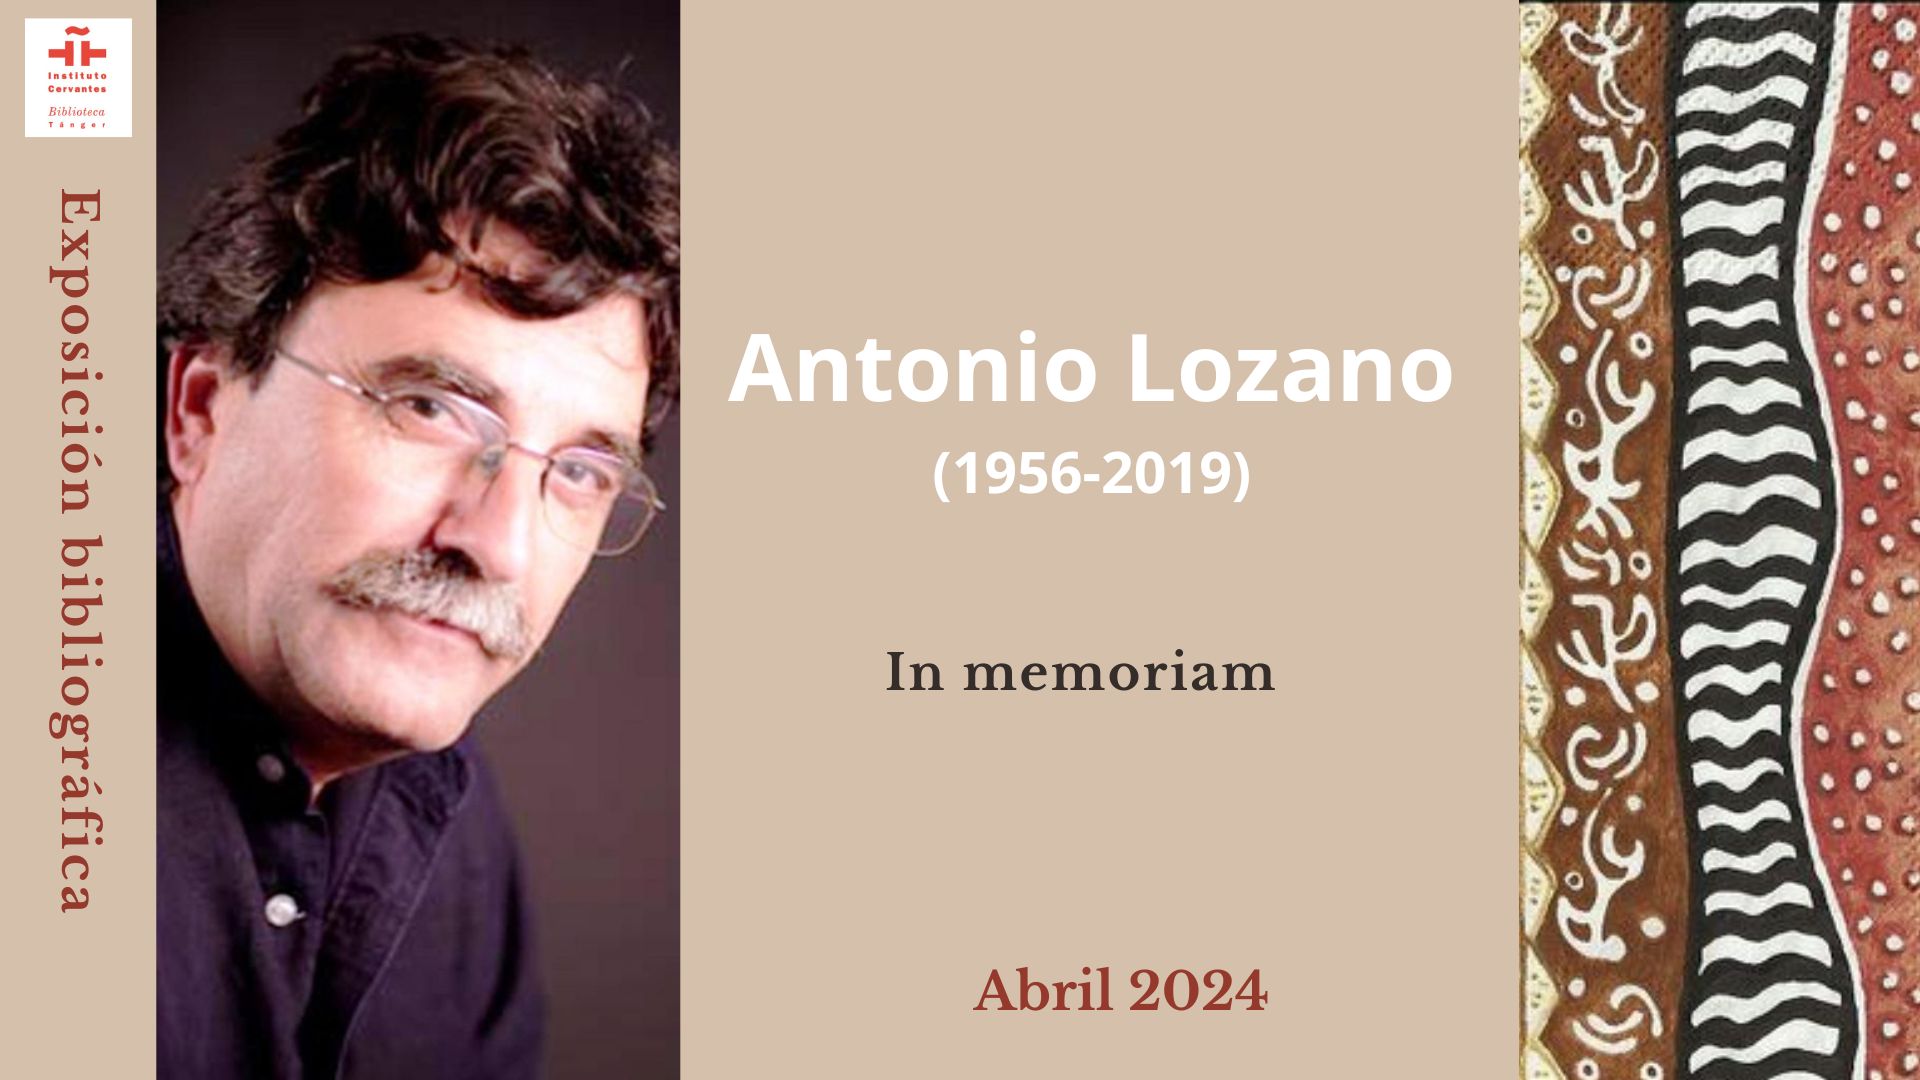 Antonio Lozano (1956-2019). In memoriam